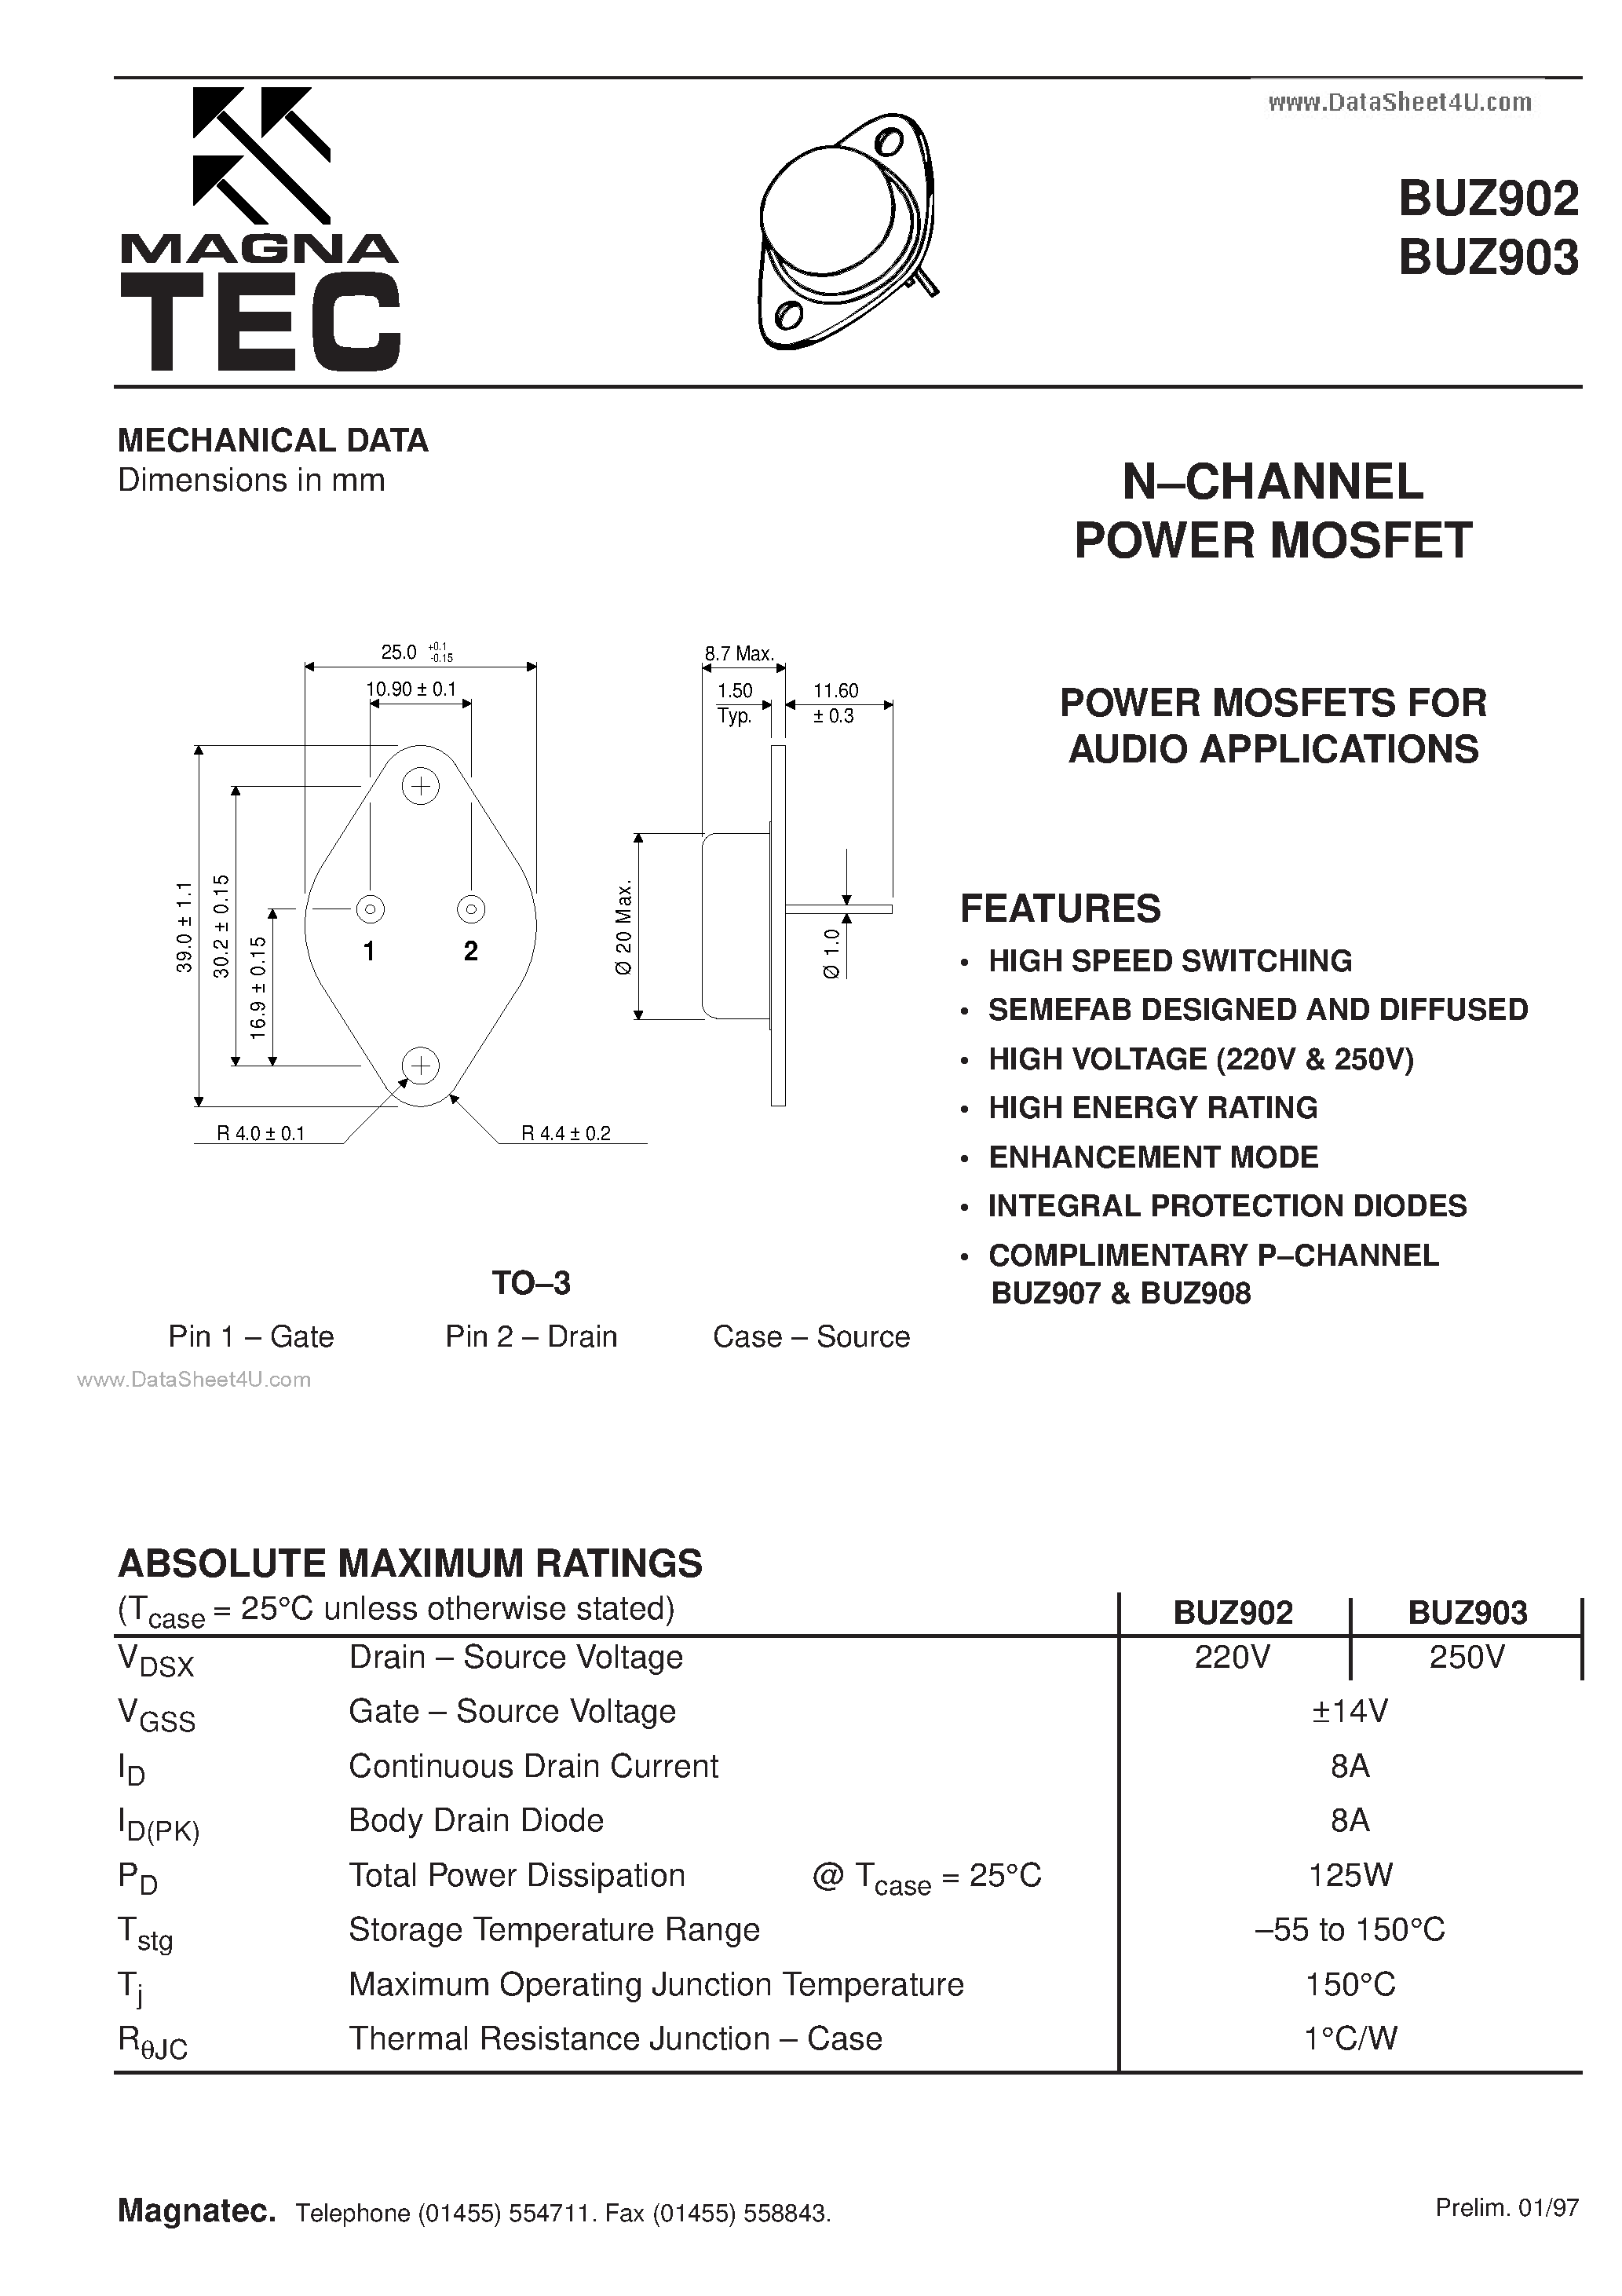 Даташит BUZ902 - (BUZ902 / BUZ903) N CHANNEL POWER MOSFET страница 1